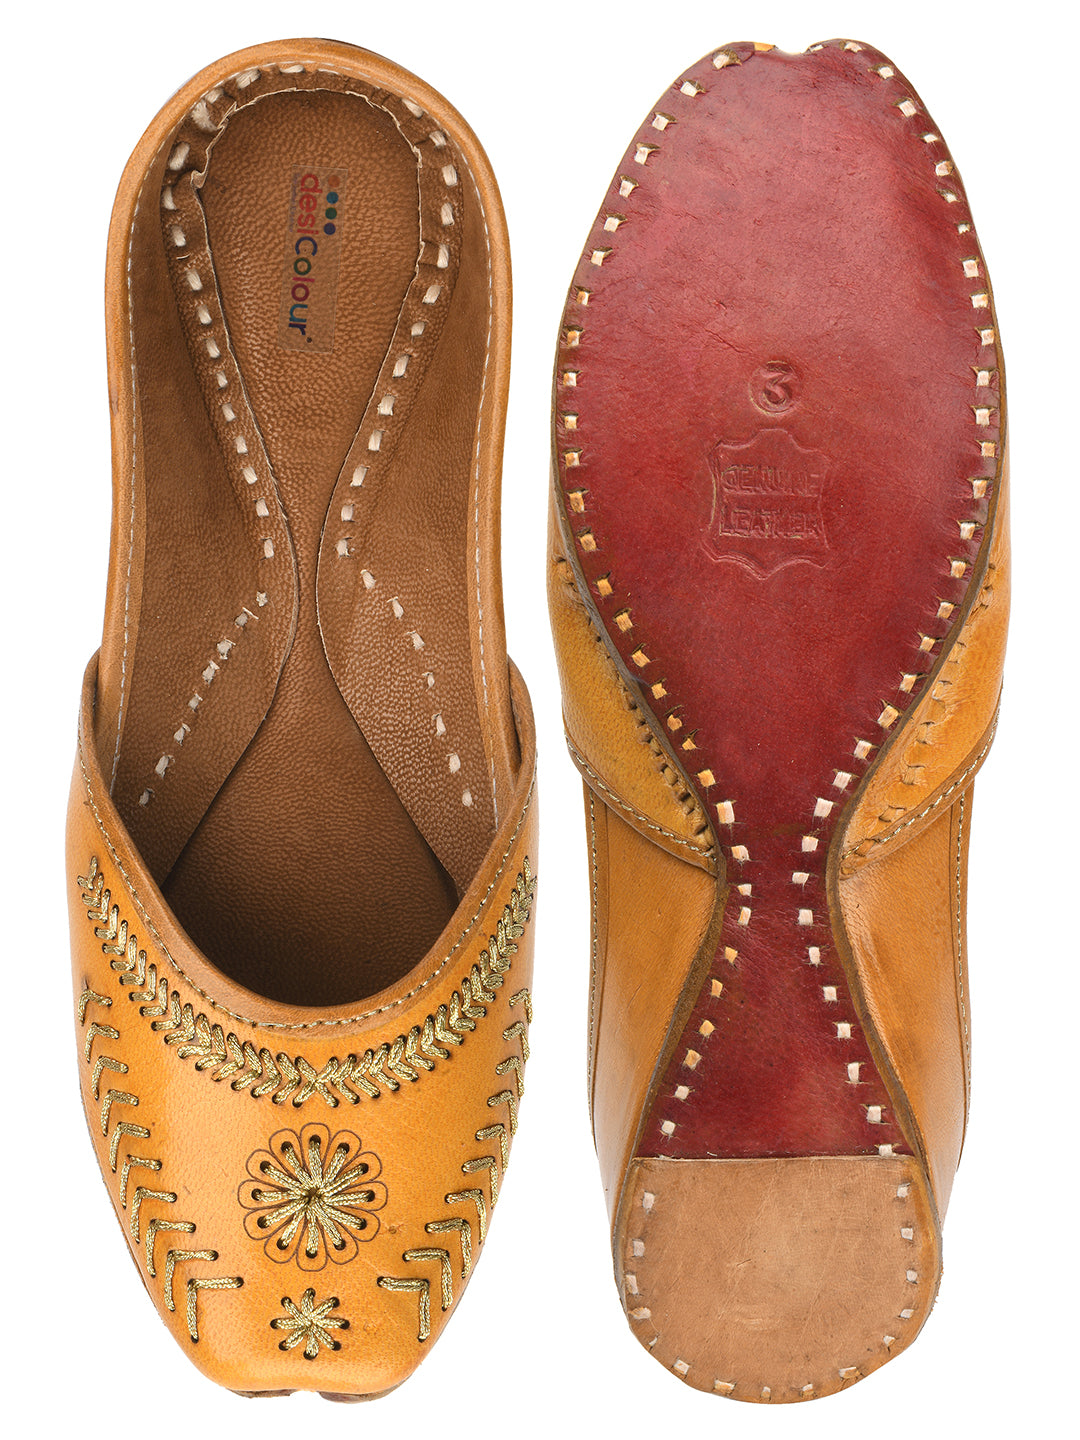 DESI COLOUR Women Brown Textured Leather Ethnic Mojaris Flats